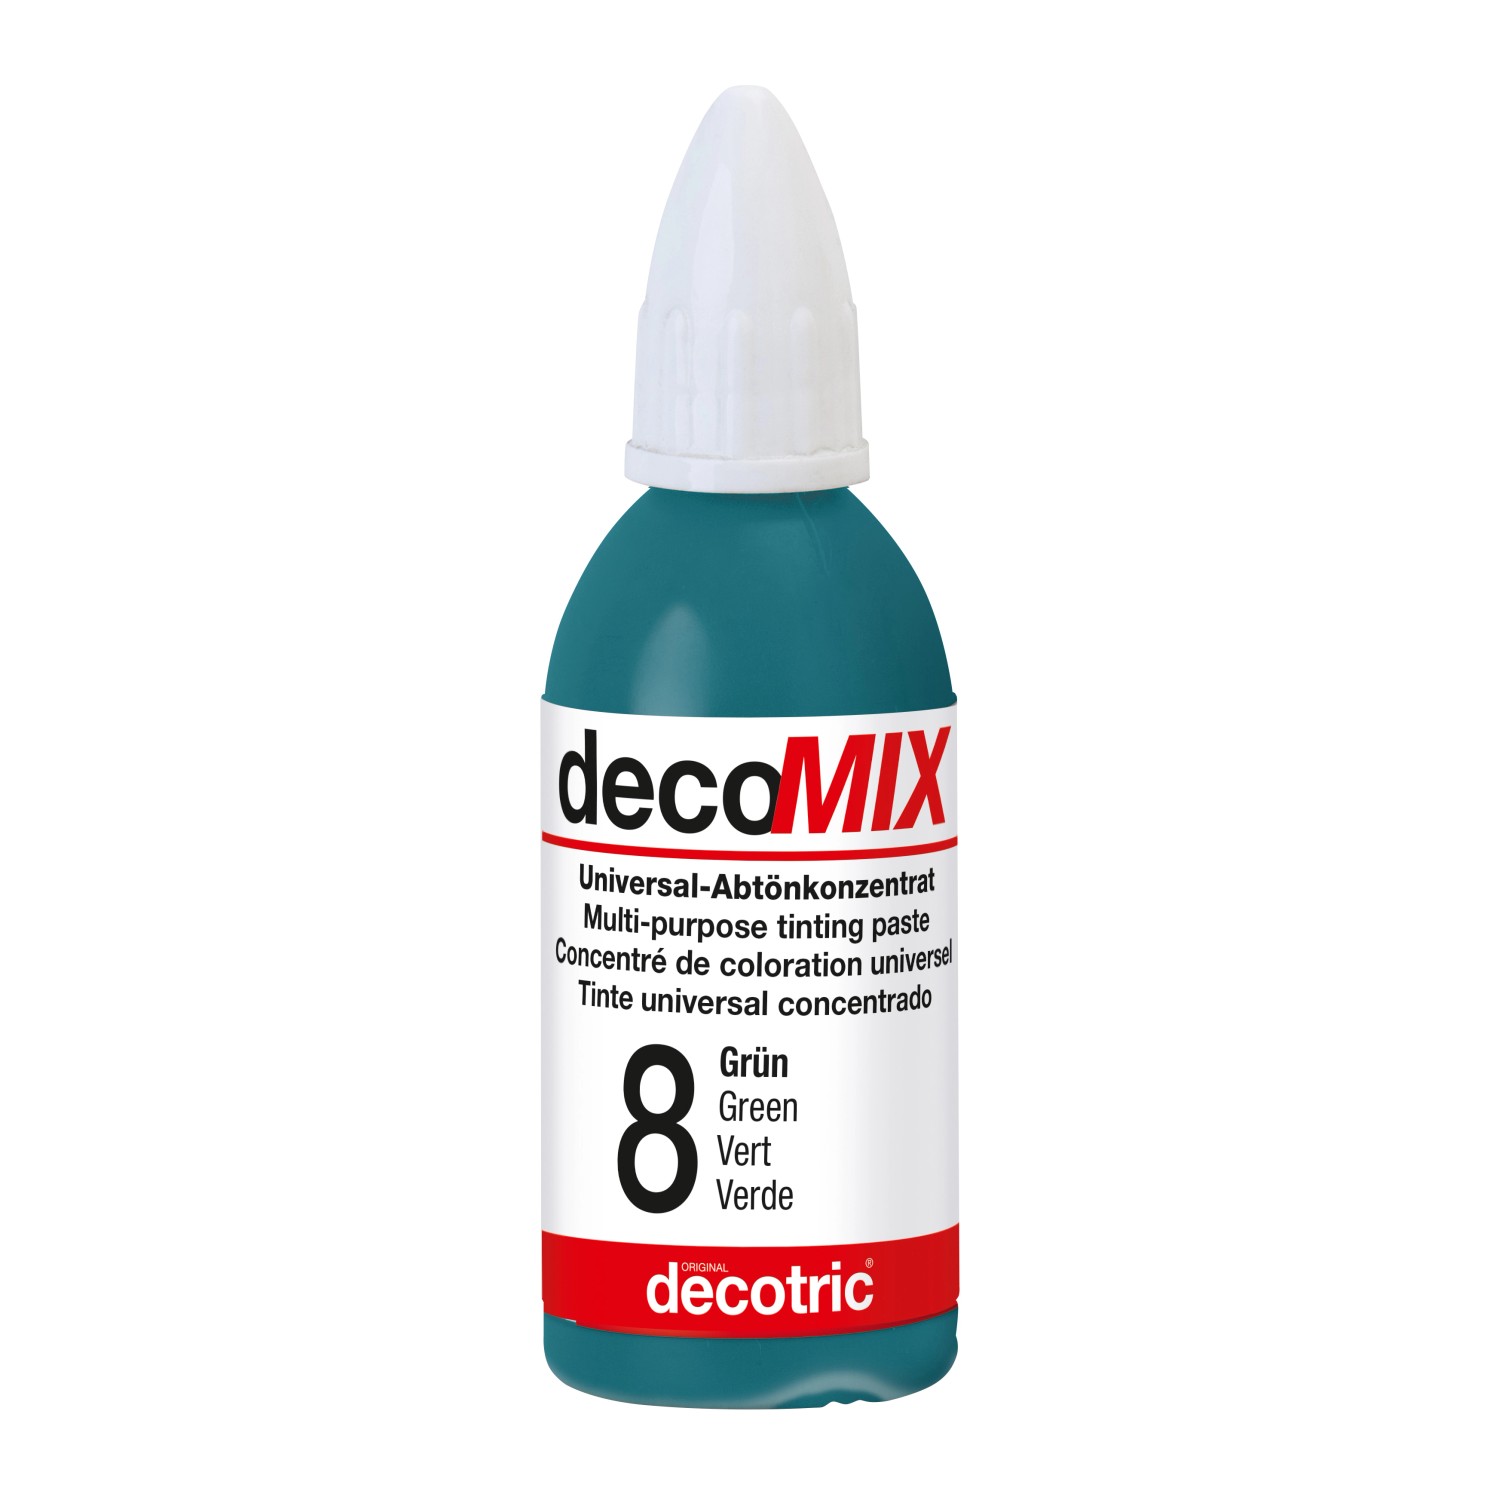 Decomix Universal-Abtönkonzentrat Grün 20 ml